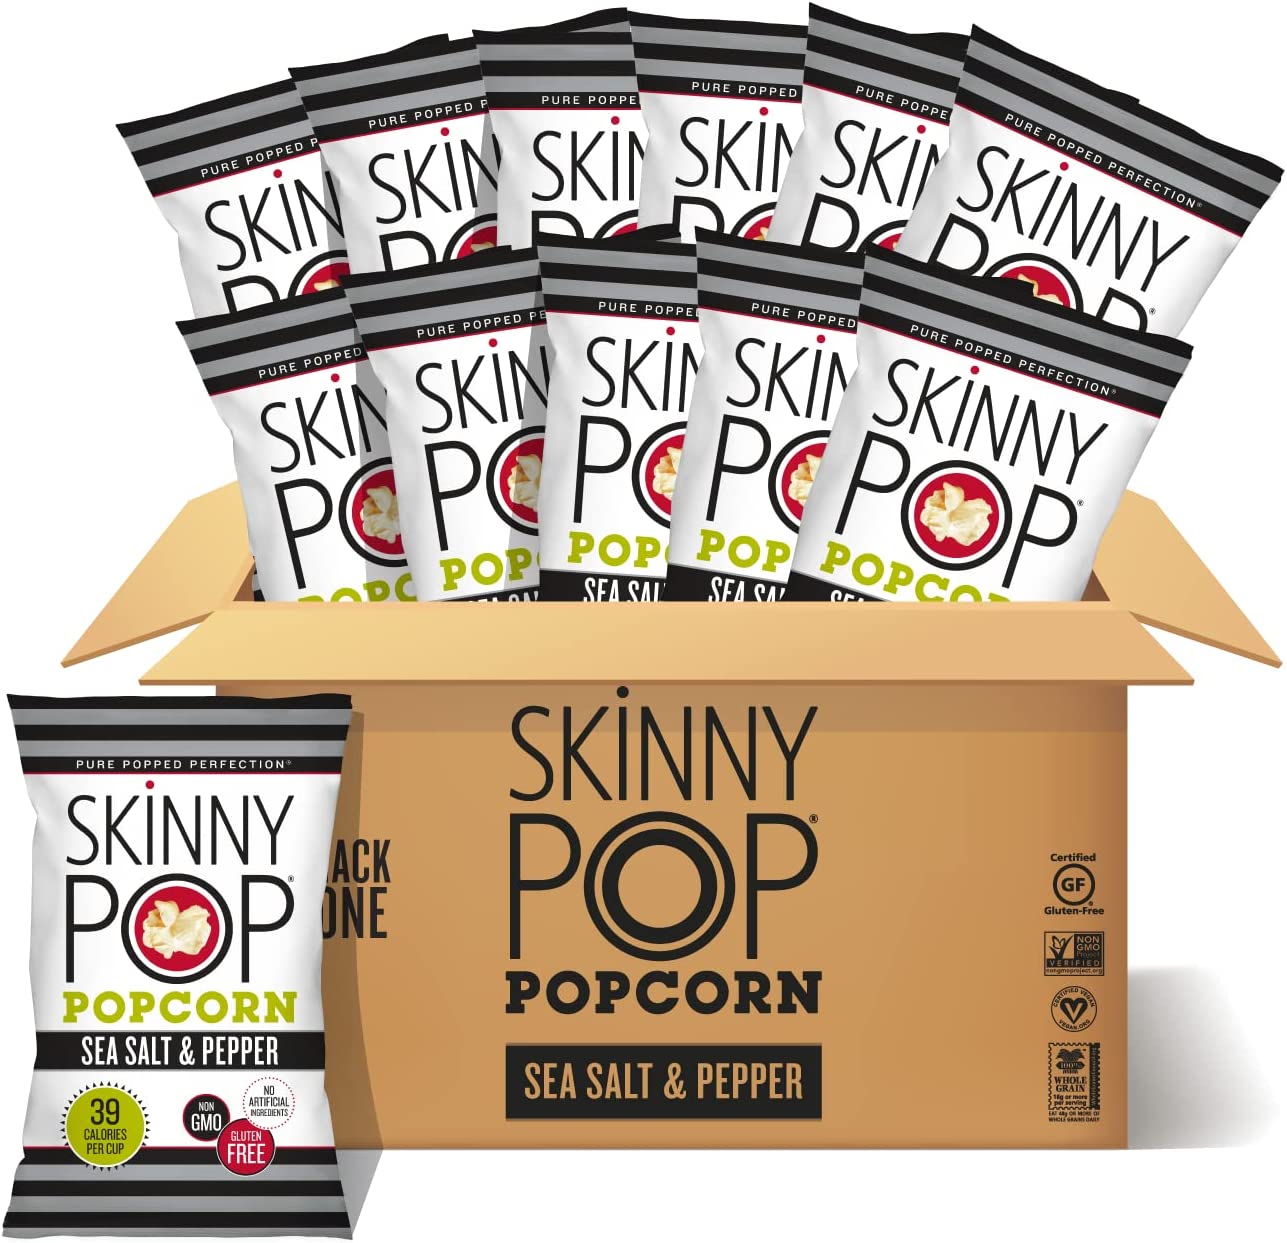 SkinnyPop Sea Salt & Pepper Popcorn, 12ct, 4.4oz Grocery Size Bags, Skinny Pop, Healthy Popcorn Snacks, Gluten Free